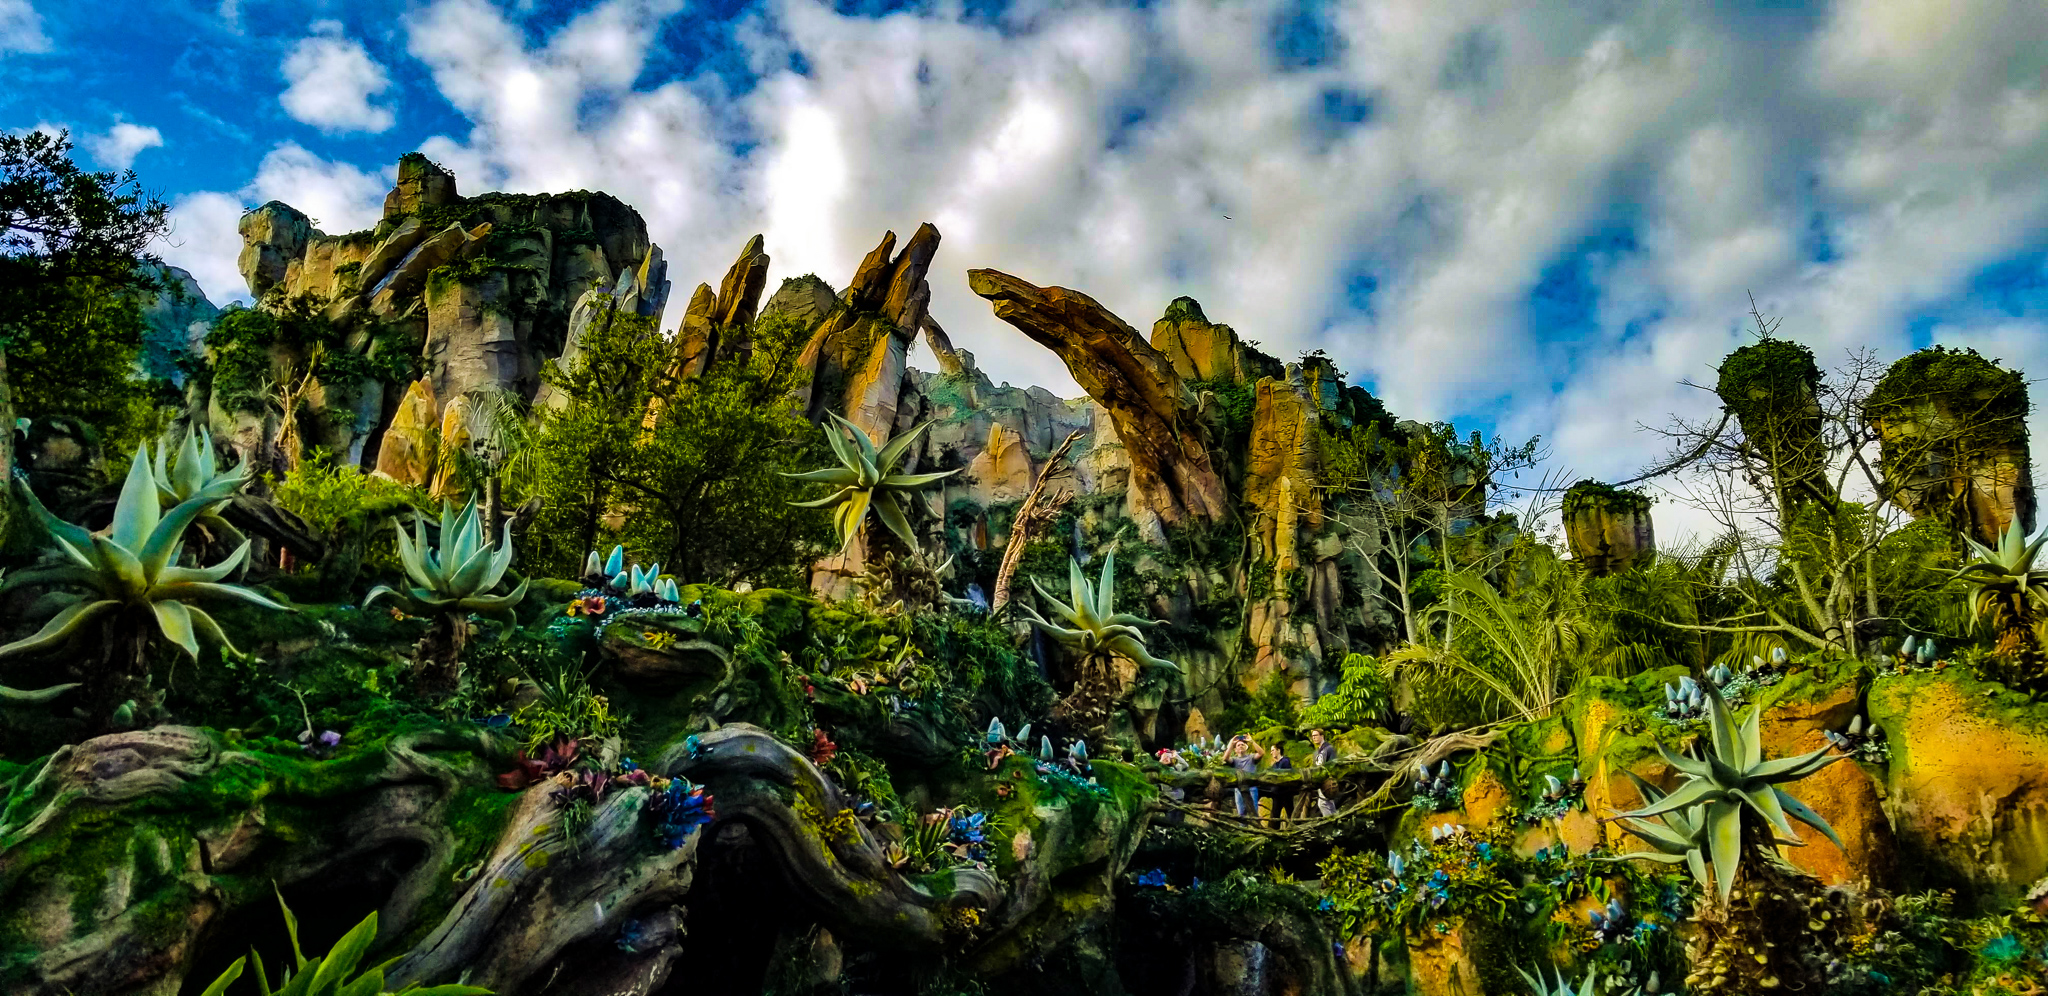 View of Pandora foliage in Animal Kingdom